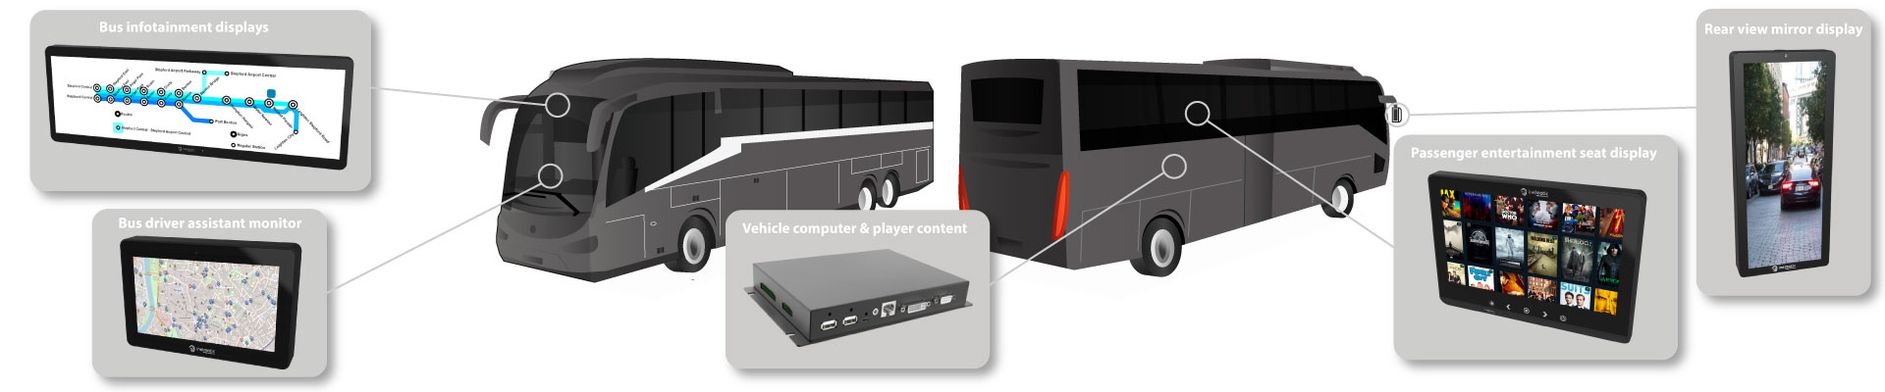 Bus/Railway multimedia infotainment players - Inelmatic 